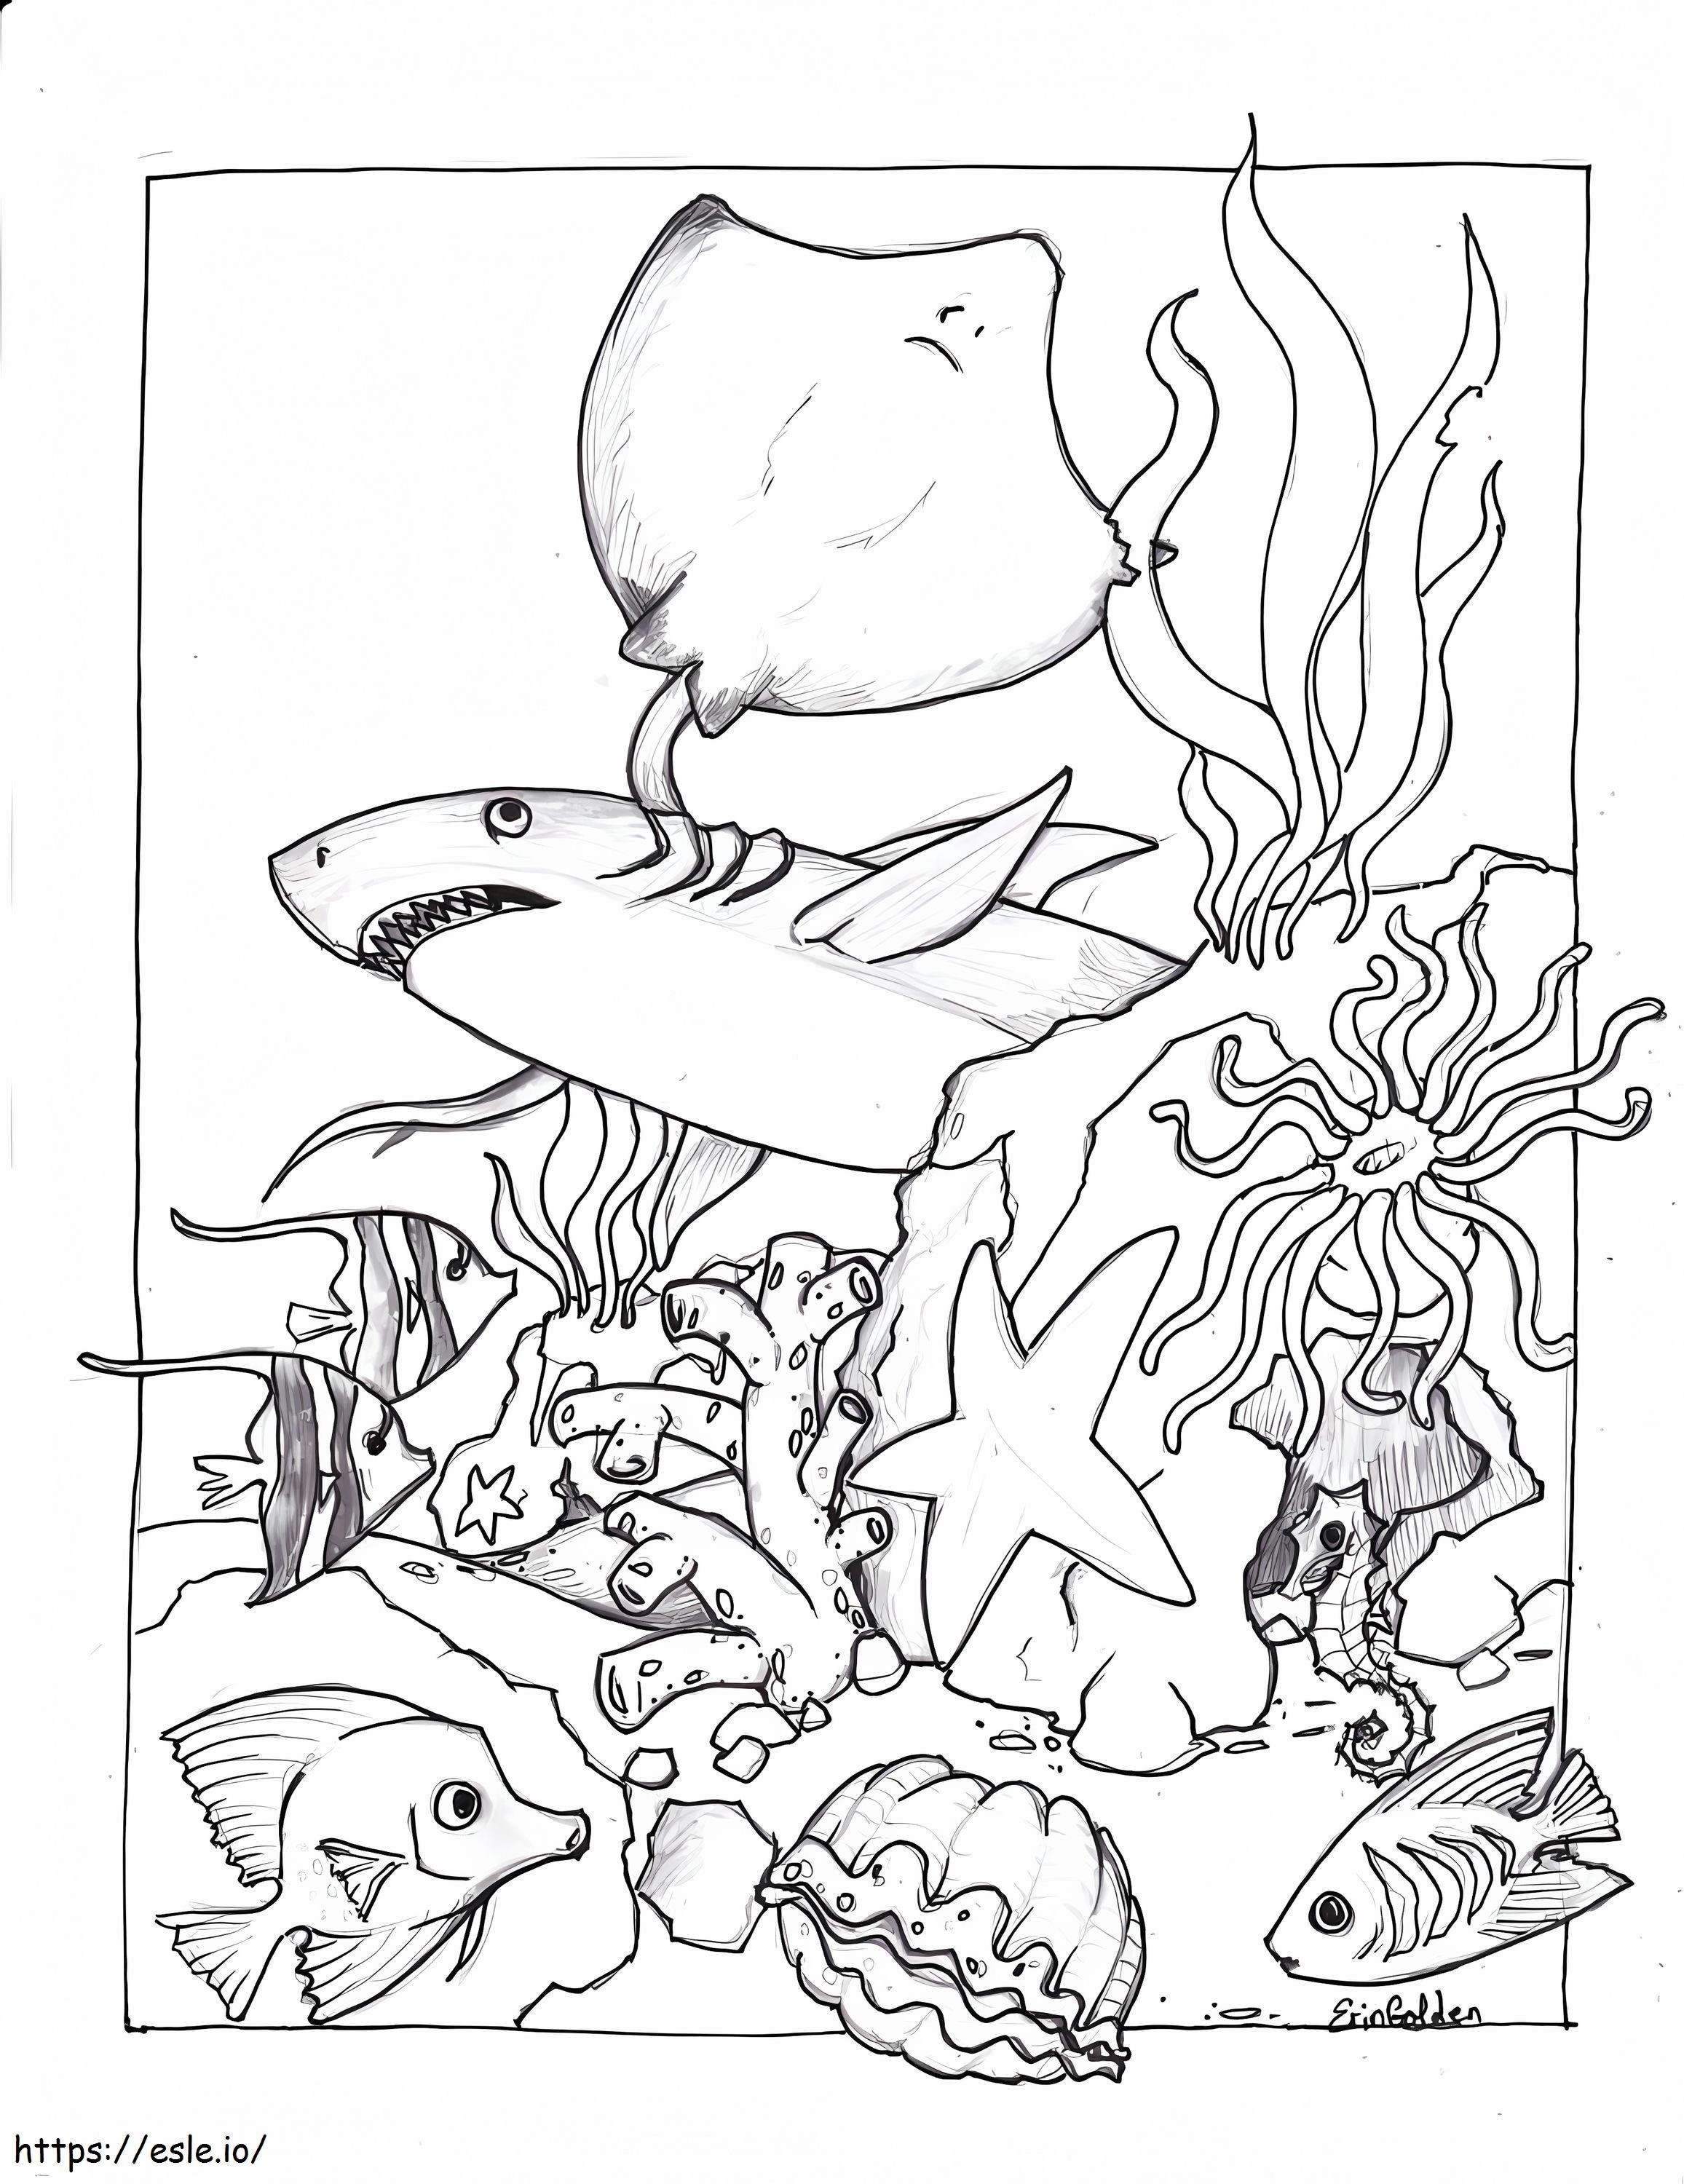 Ocean Creatures coloring page